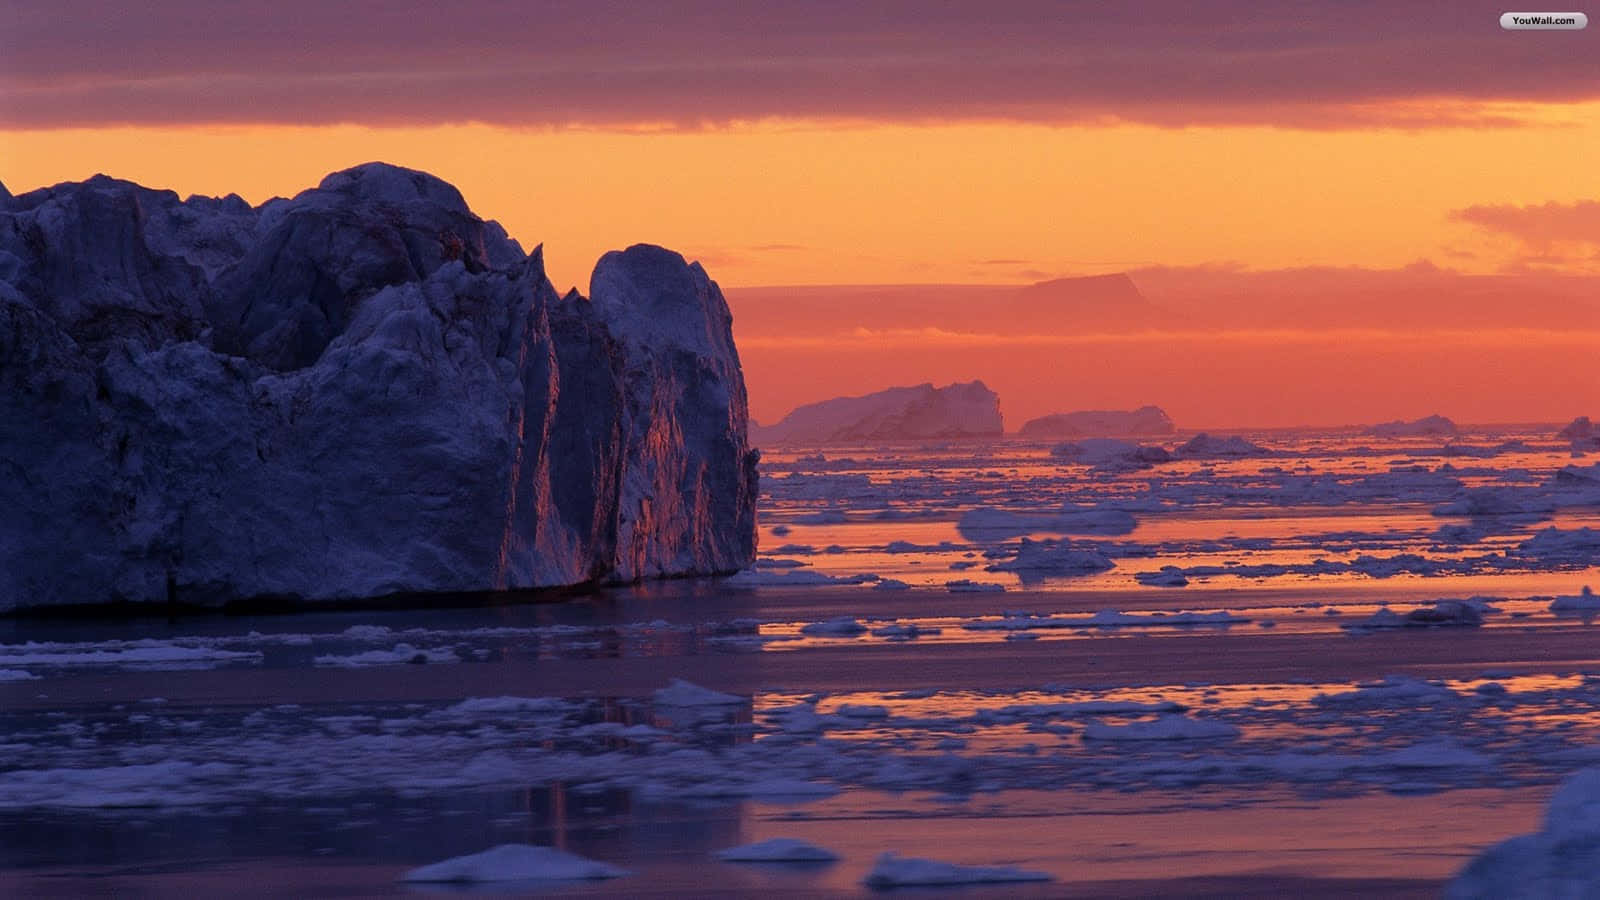 Icebergs amid a snowy Antarctic landscape.